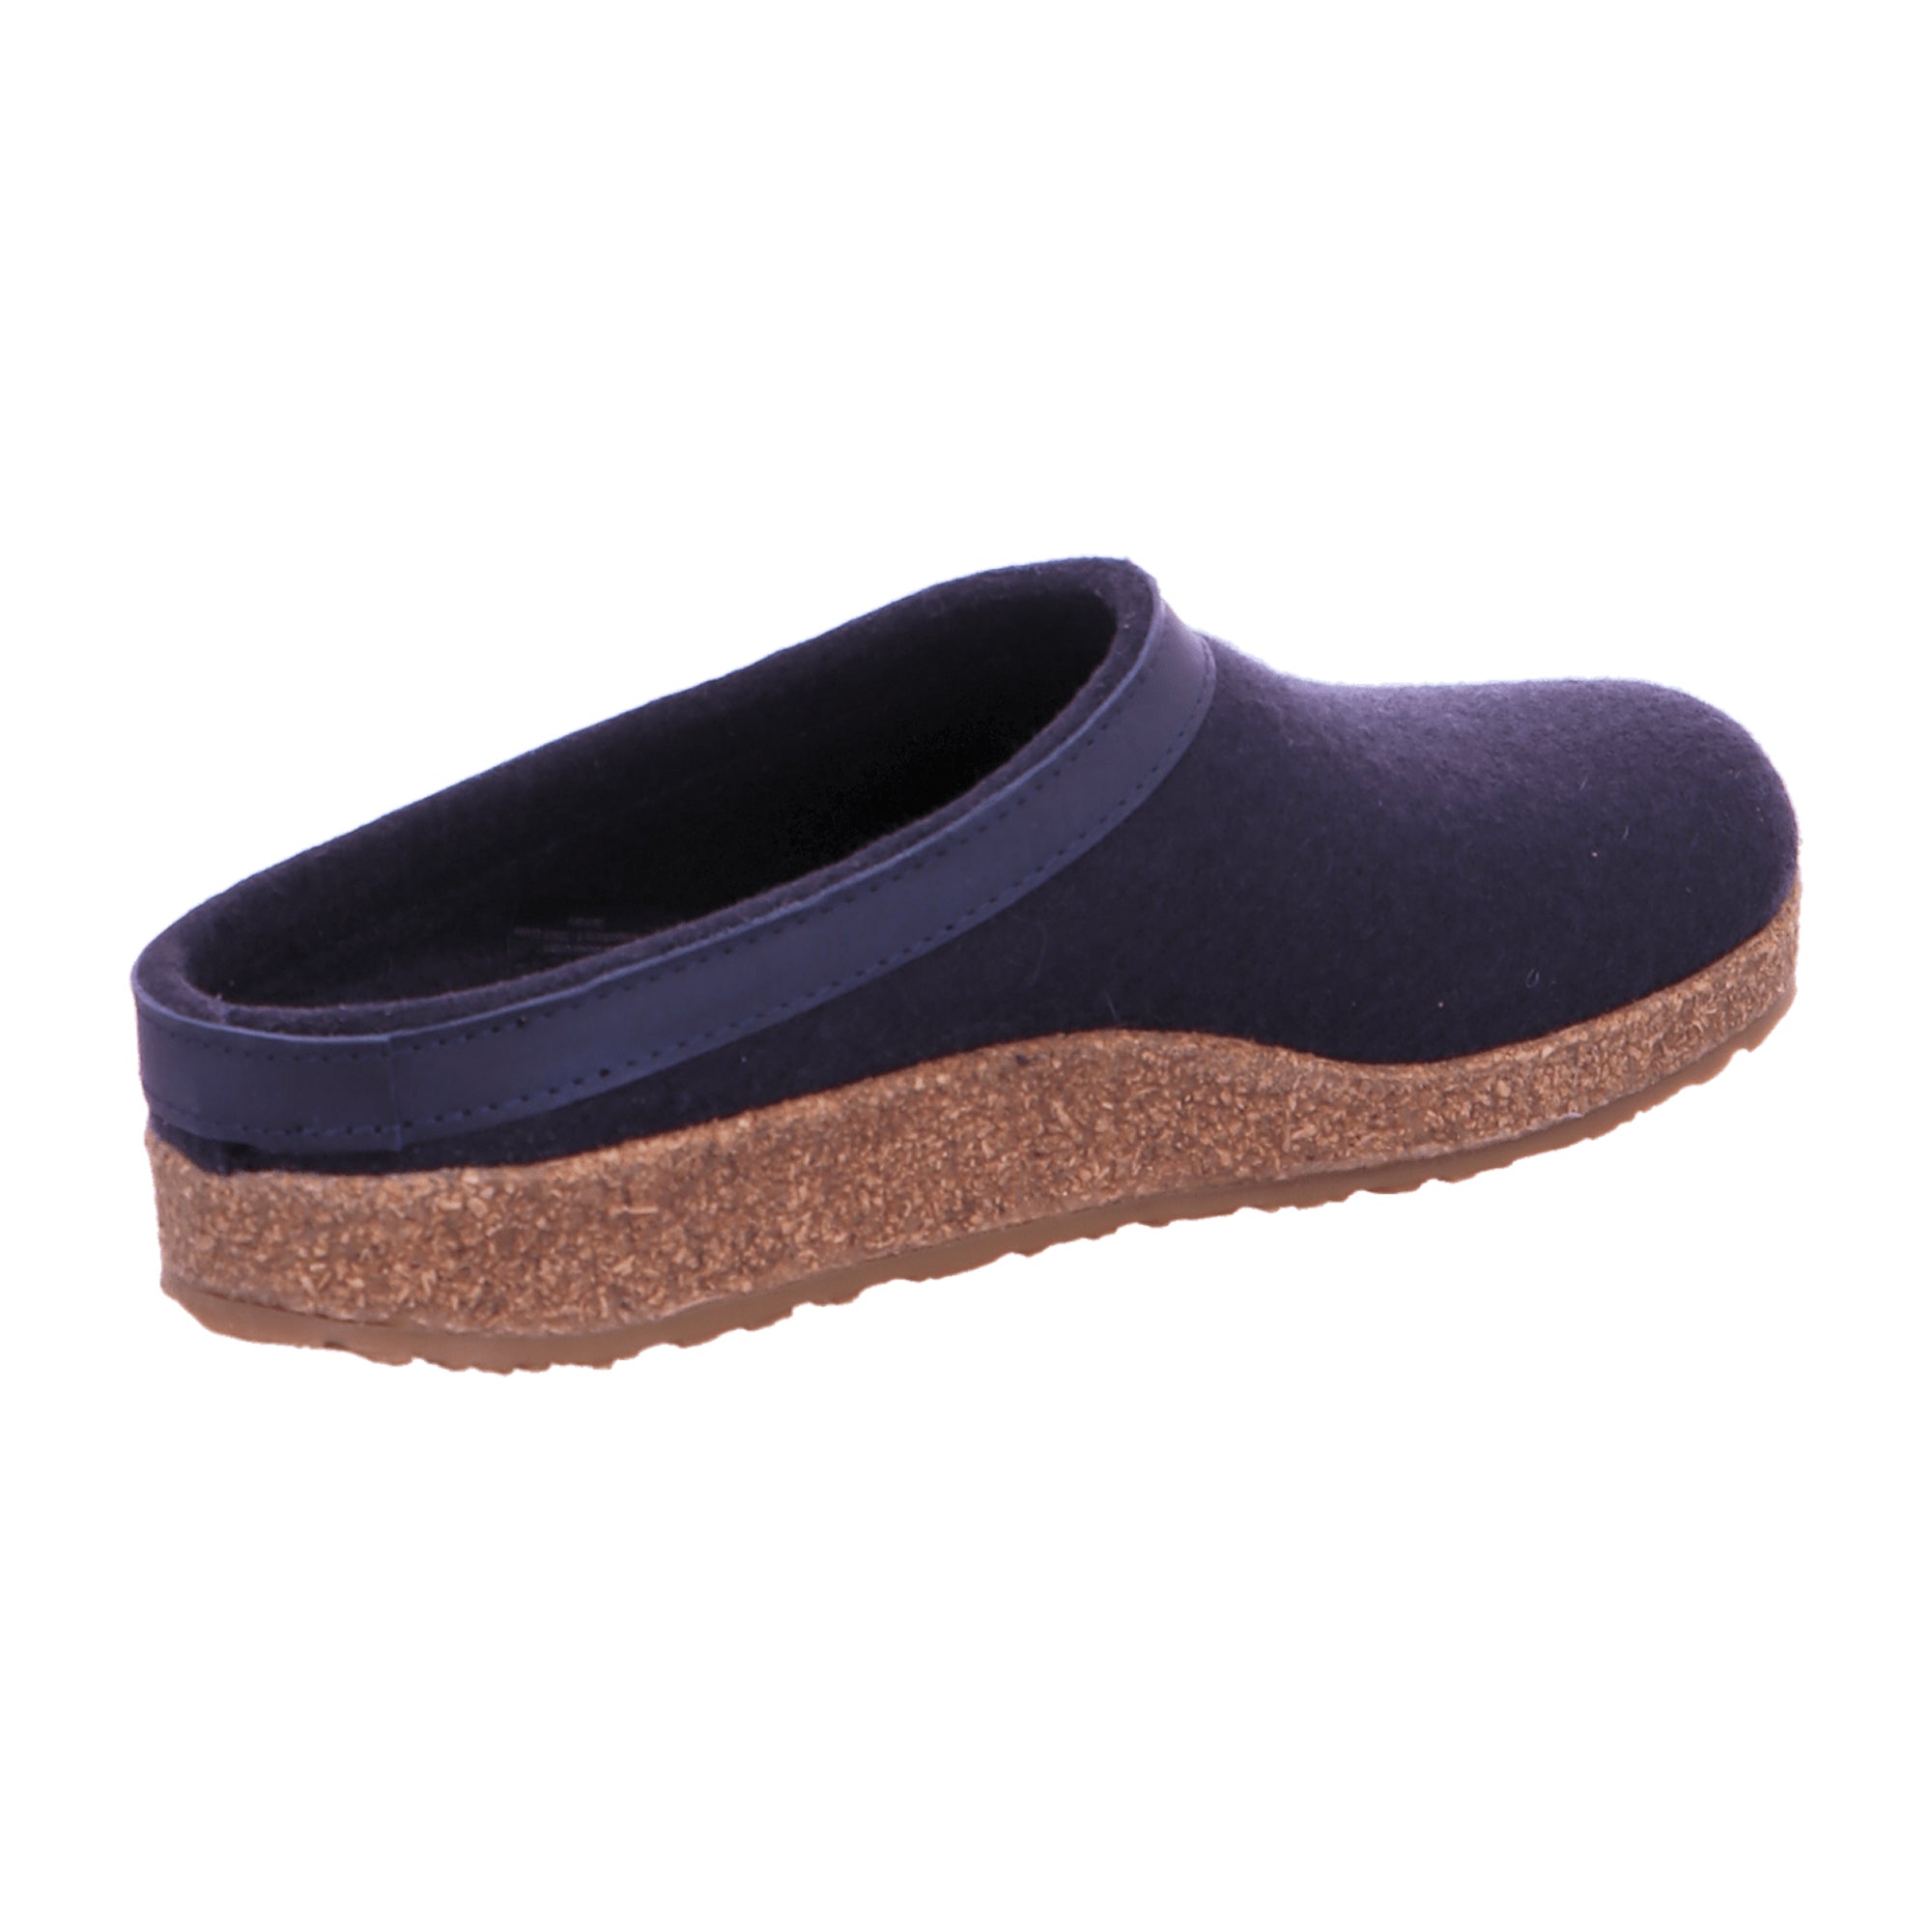 Haflinger Grizzly Torben Men's Clogs - Stylish & Durable Blue Wool Felt Footwear